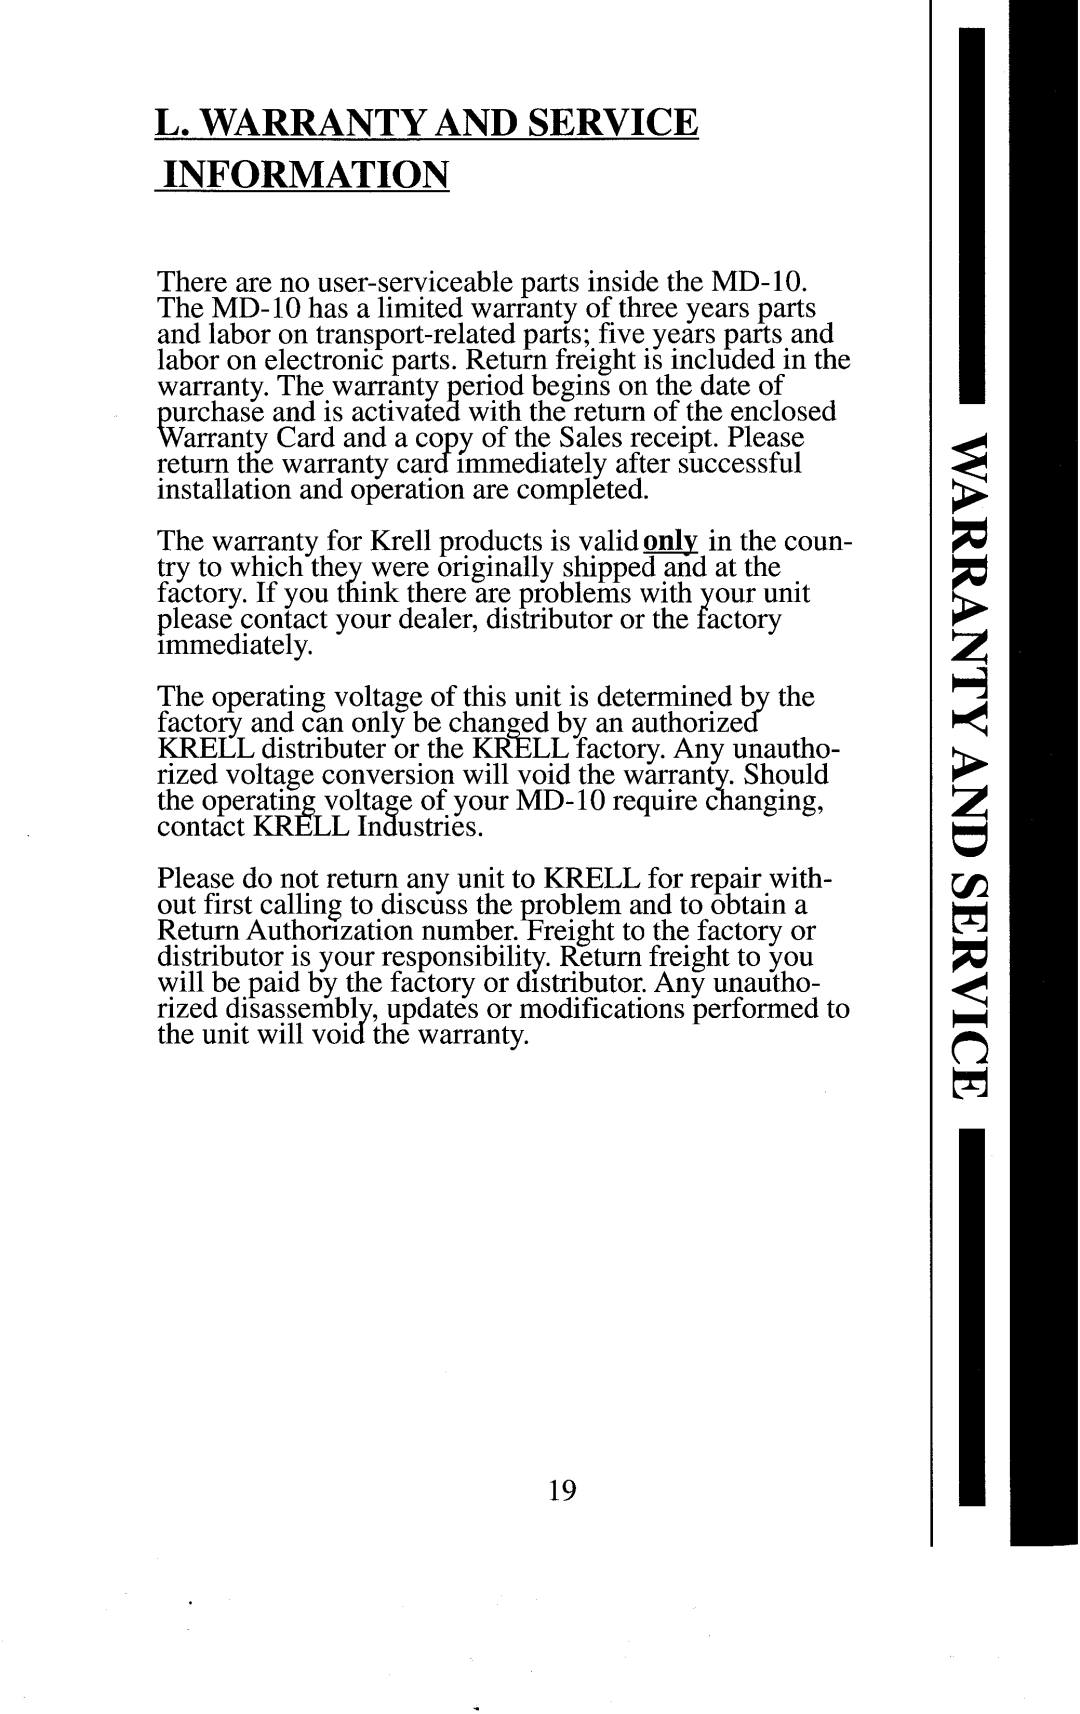 Krell Industries MD10 manual Warrantyand Service Information 